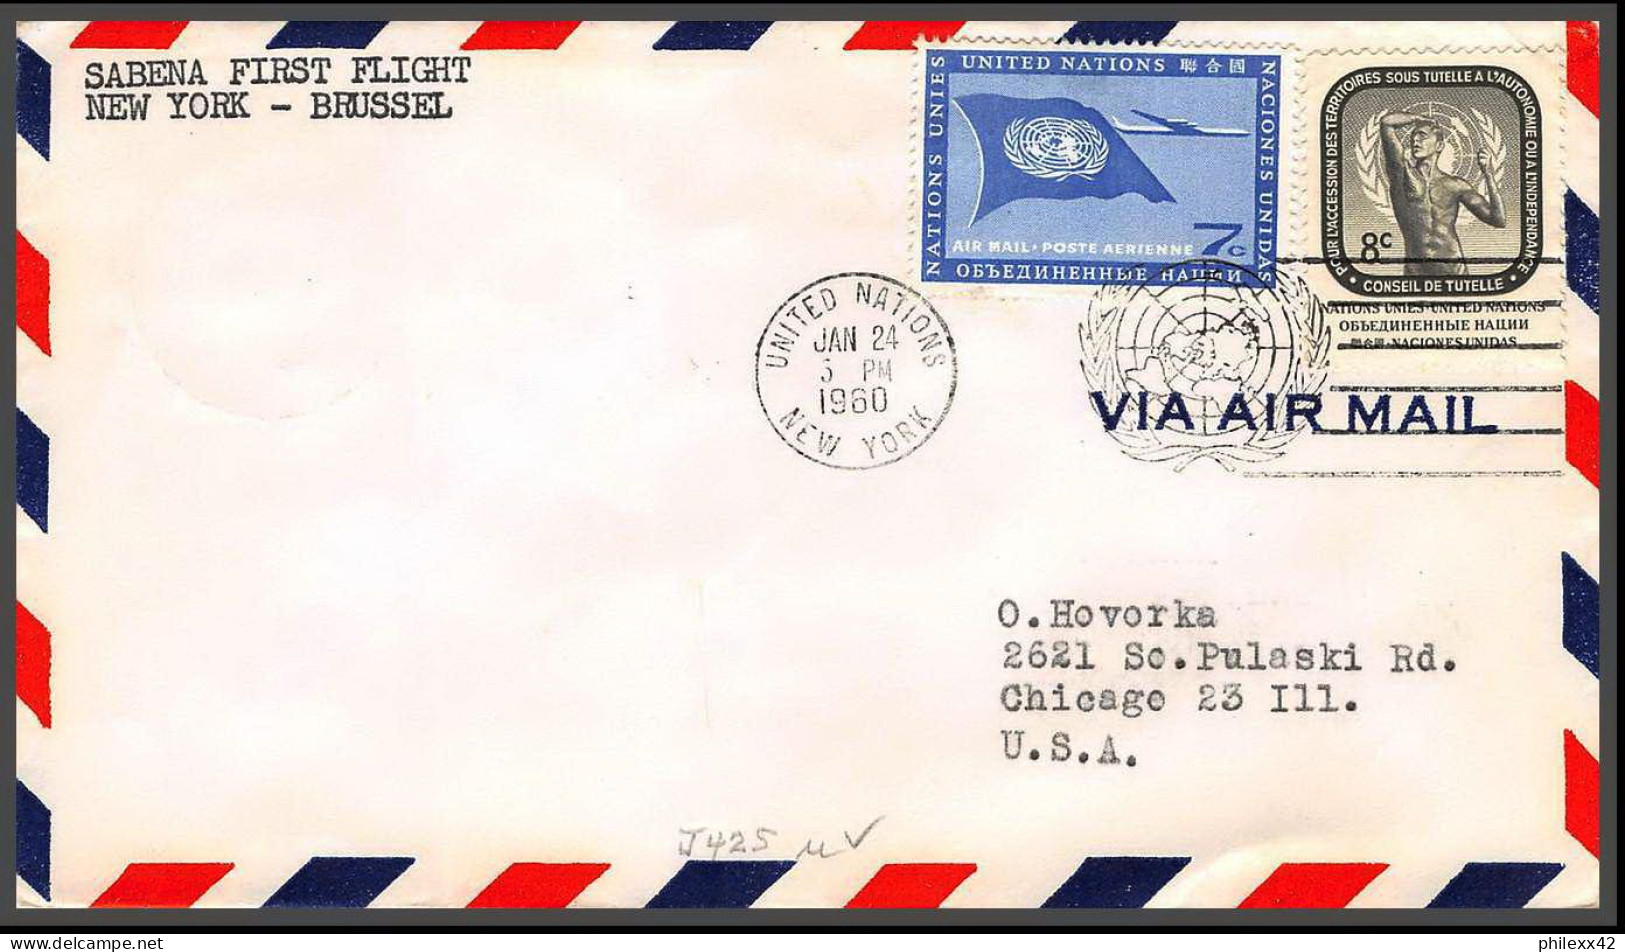 12664 SABENA 24/1/1960 Premier Vol First Flight Lettre Airmail Cover Usa New York Brussel Belgique United Nations  - Aviones